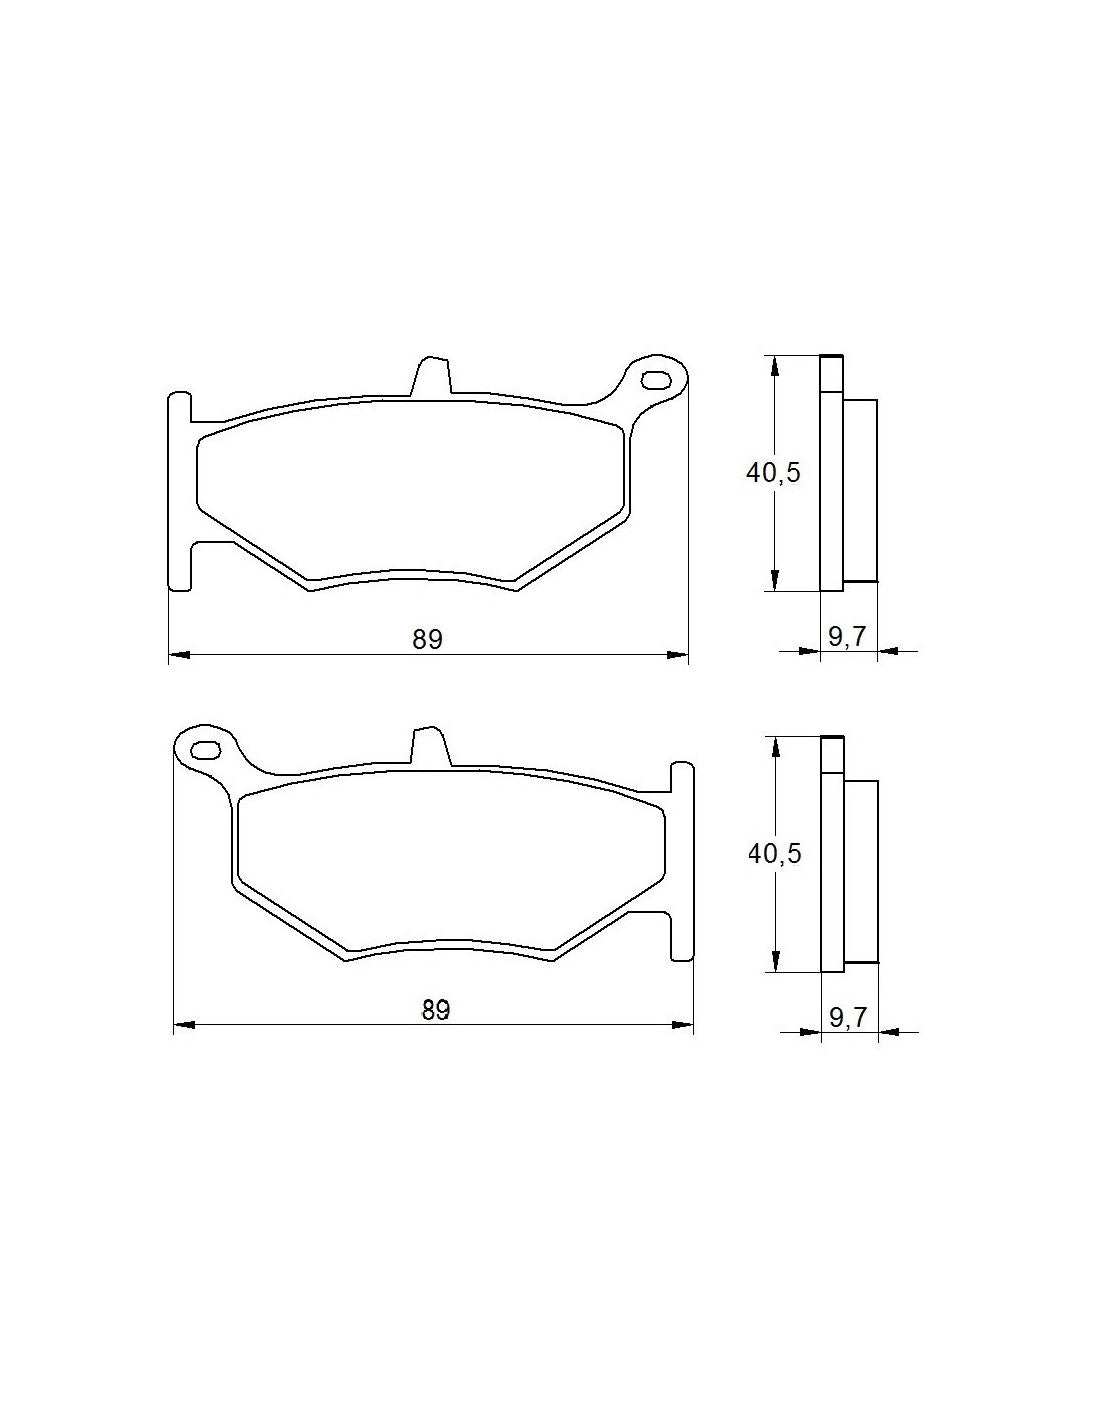 Accossato Brake Pads Kit For Motorcycle, AGPP148ST (Rear) Accossato